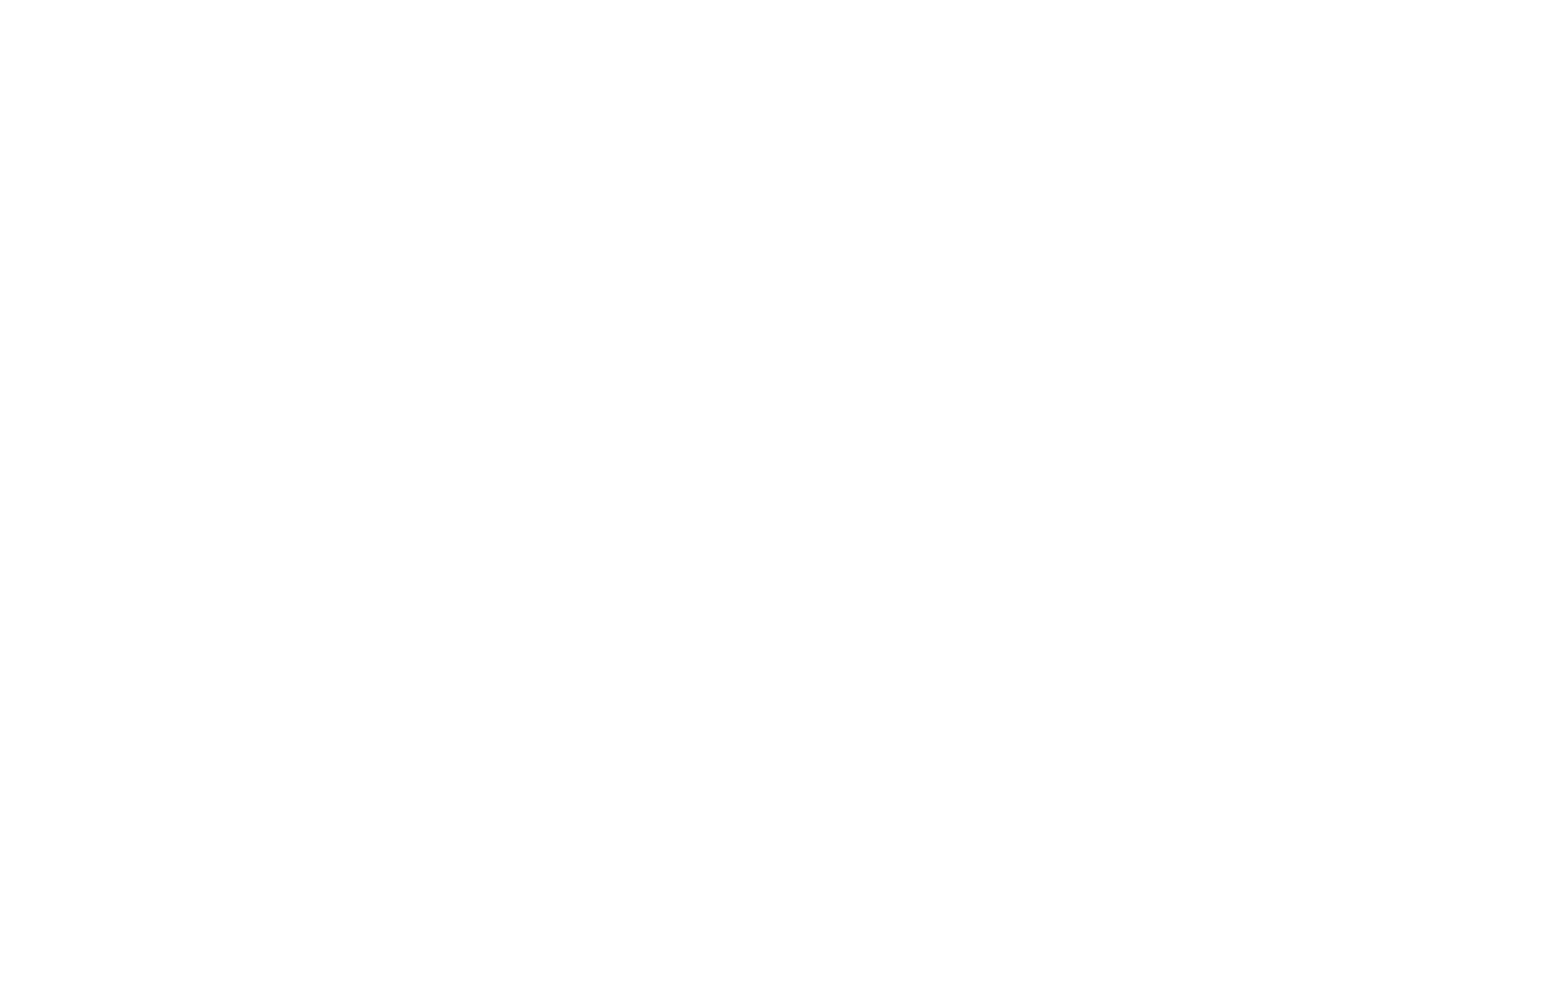 Монохром логотипа - Брендбук производителя тюбингов Baboom